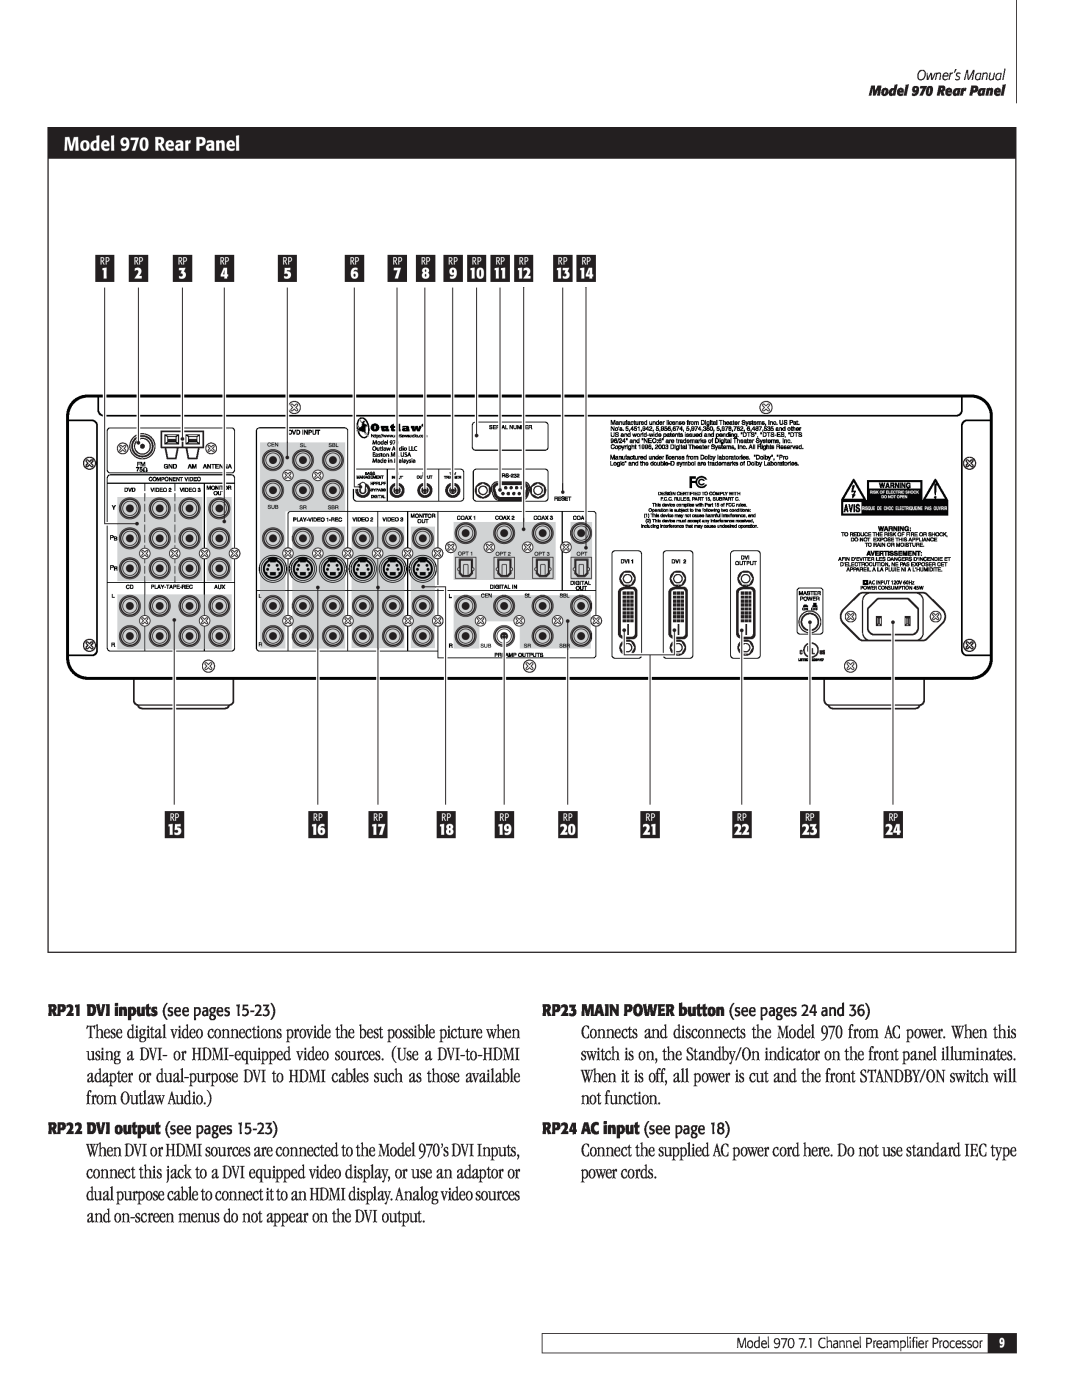 Outlaw Audio Model 970 Rear Panel, RP21 DVI inputs see pages, RP22 DVI output see pages, RP24 AC input see page 